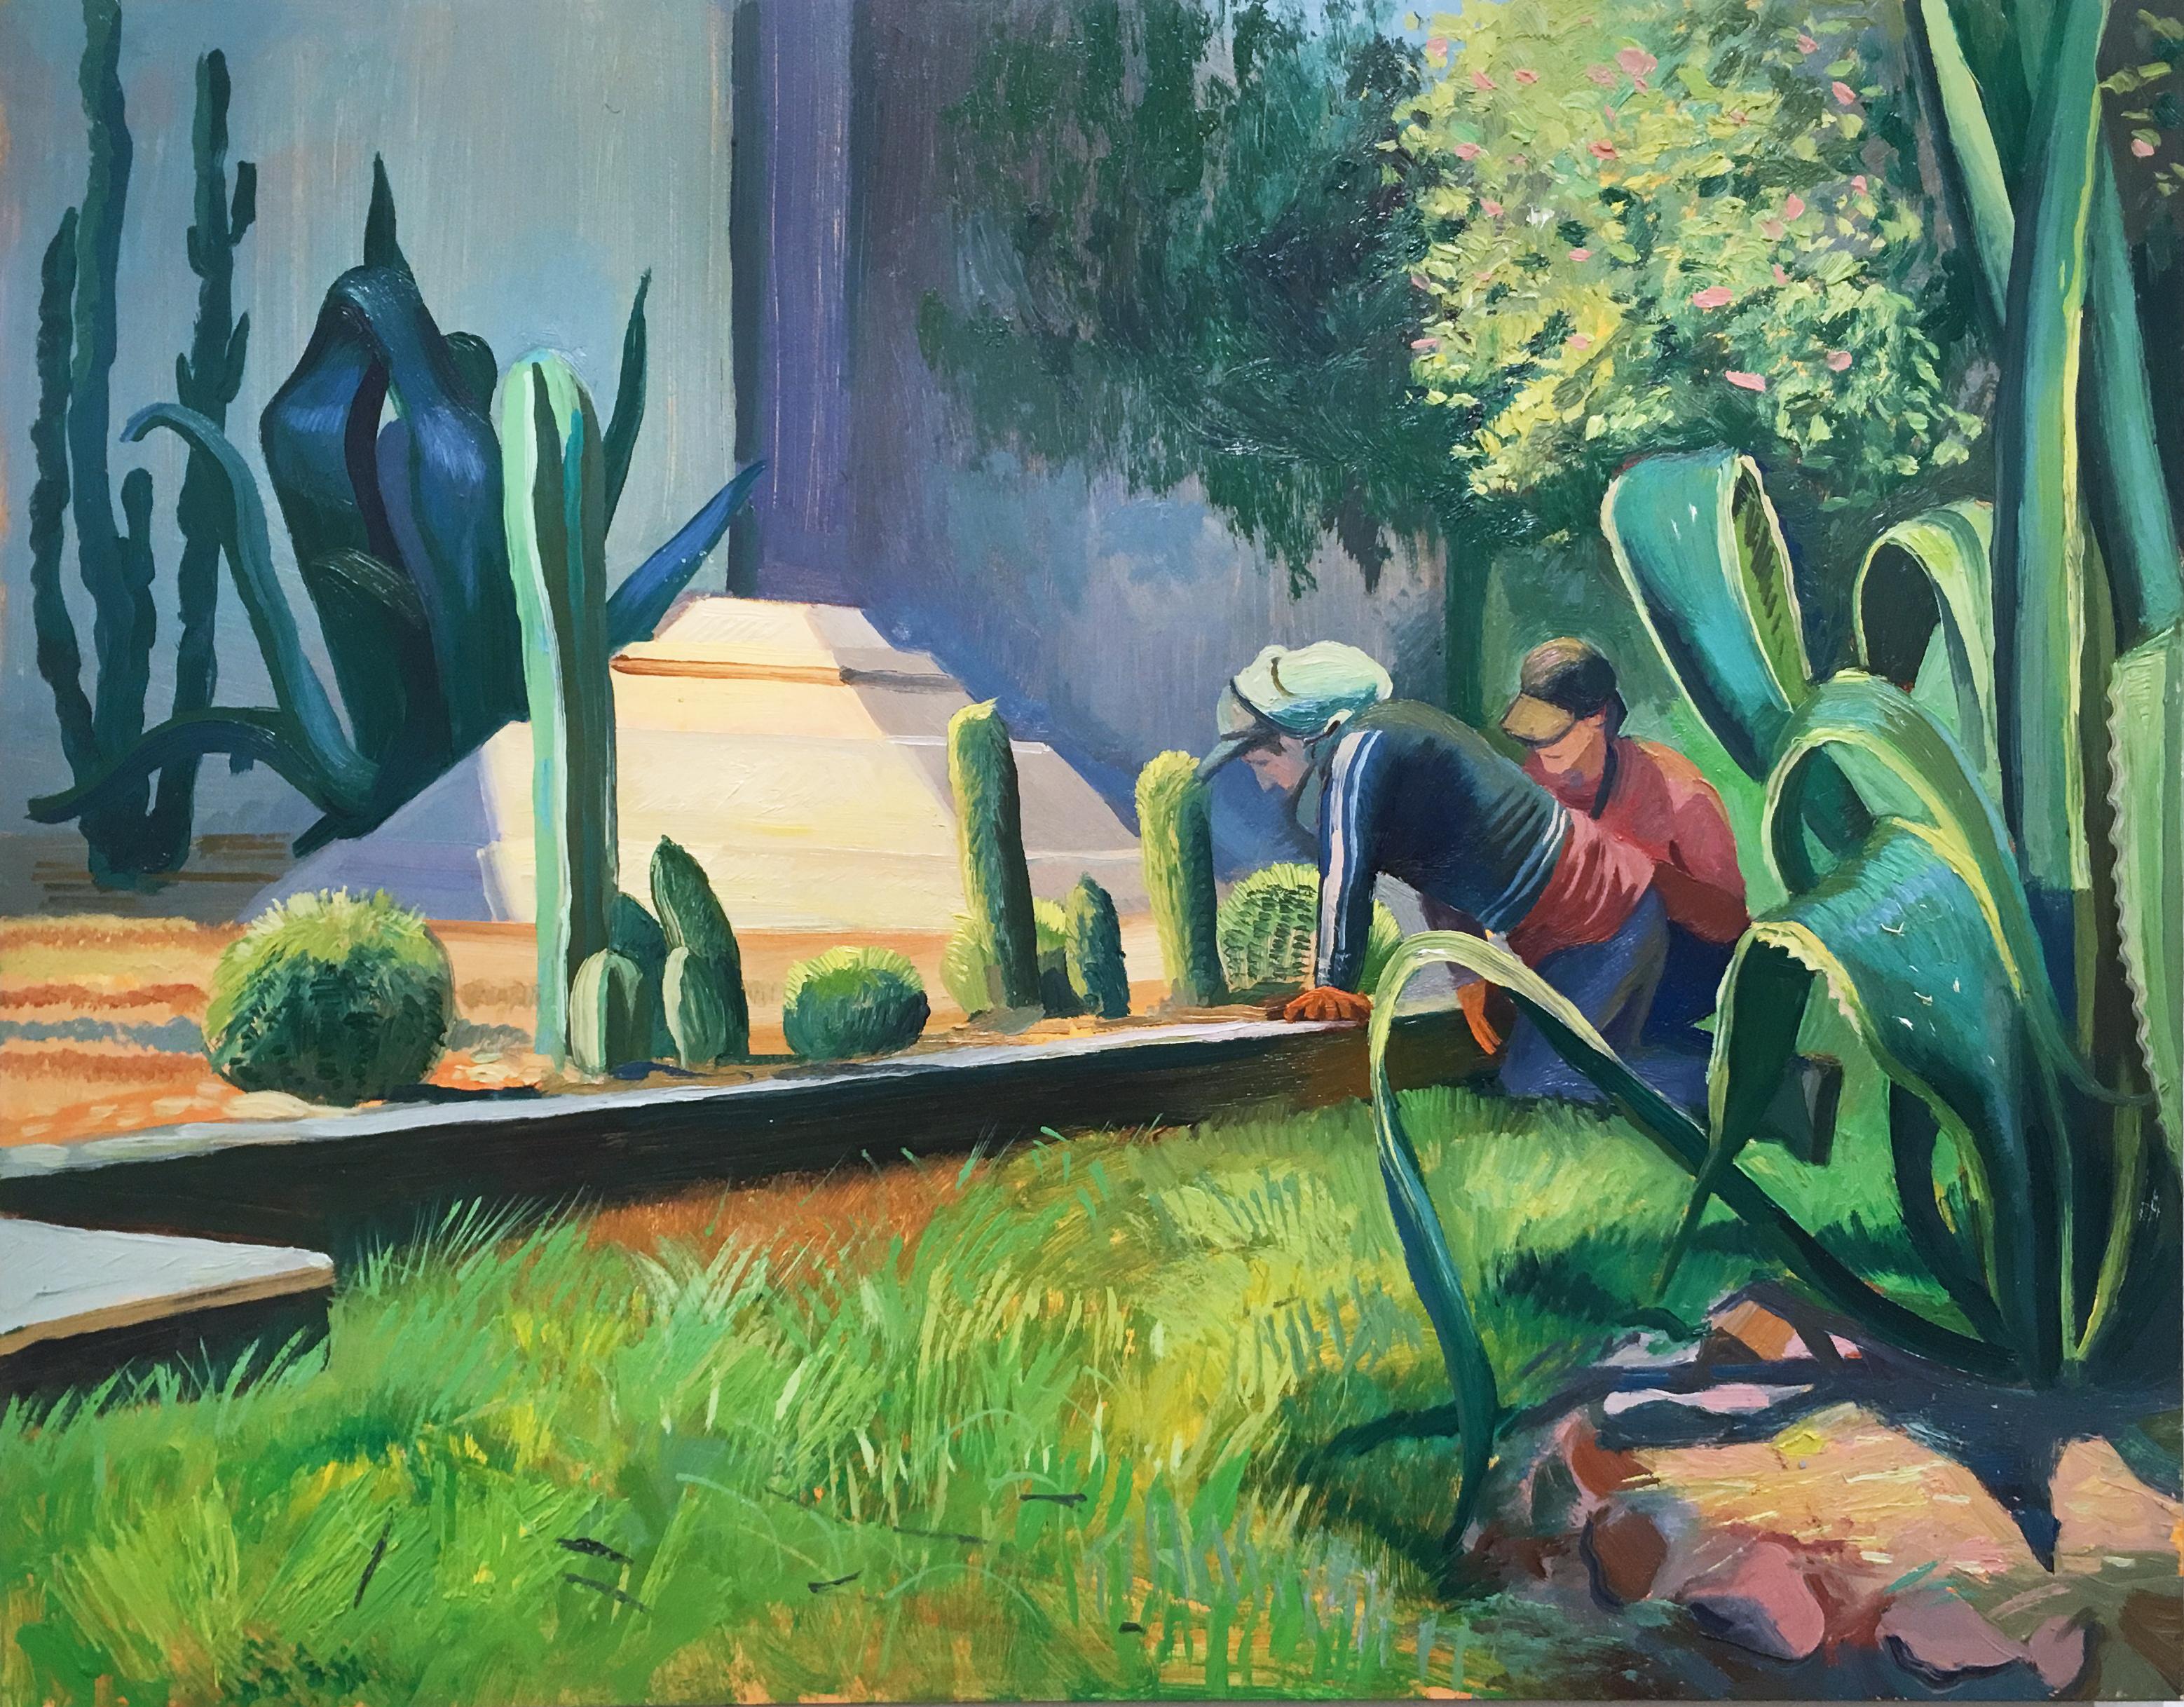 Mexico City 1, plein air figurative, landscape, oil on panel, 2018